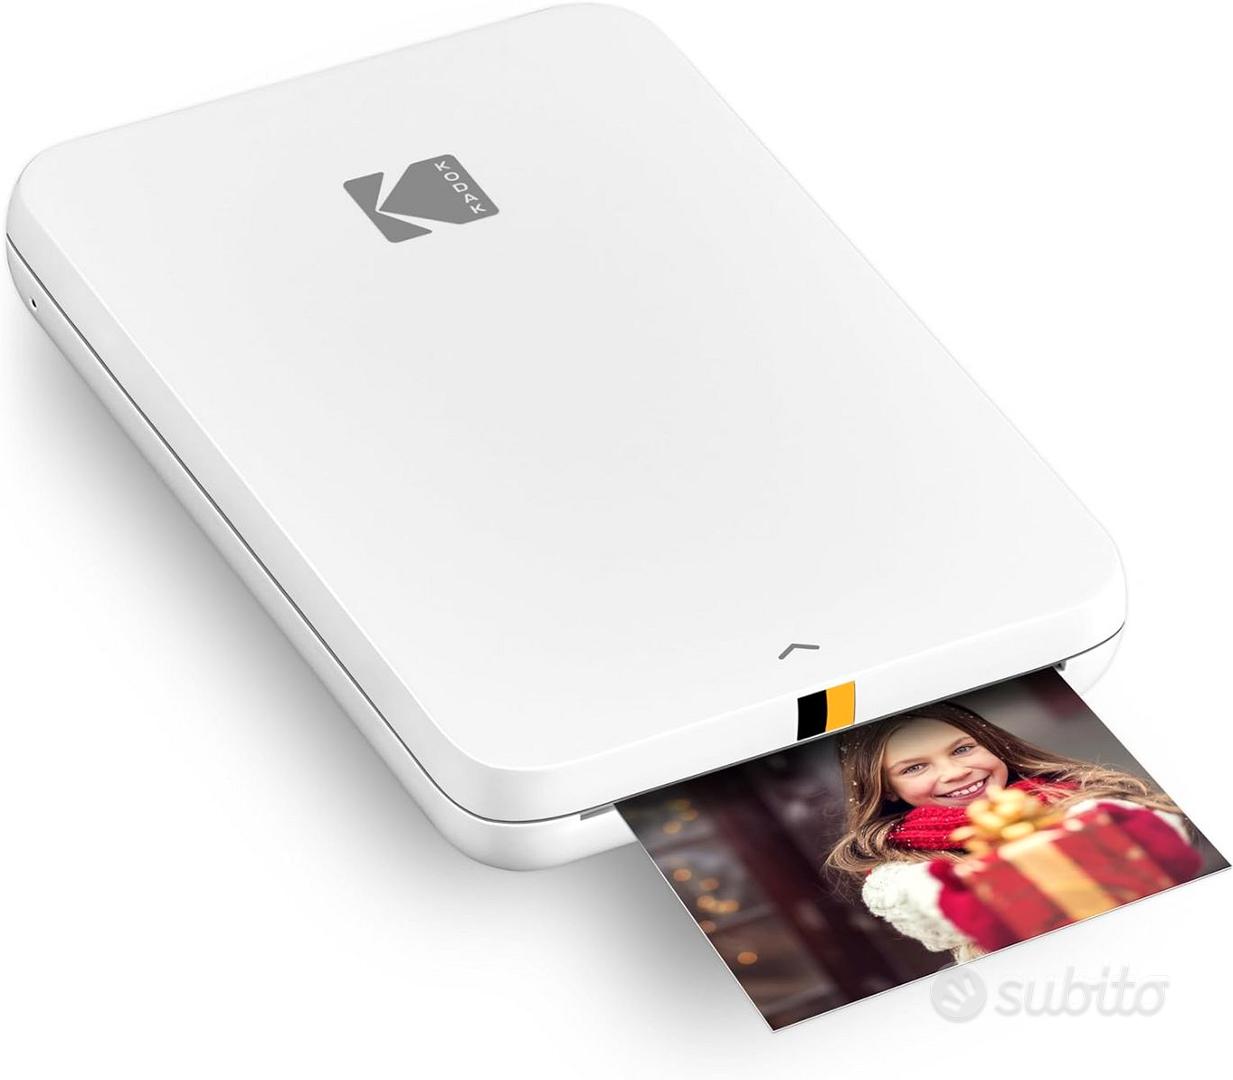 stampante portatile kodak step slim - Fotografia In vendita a Mantova